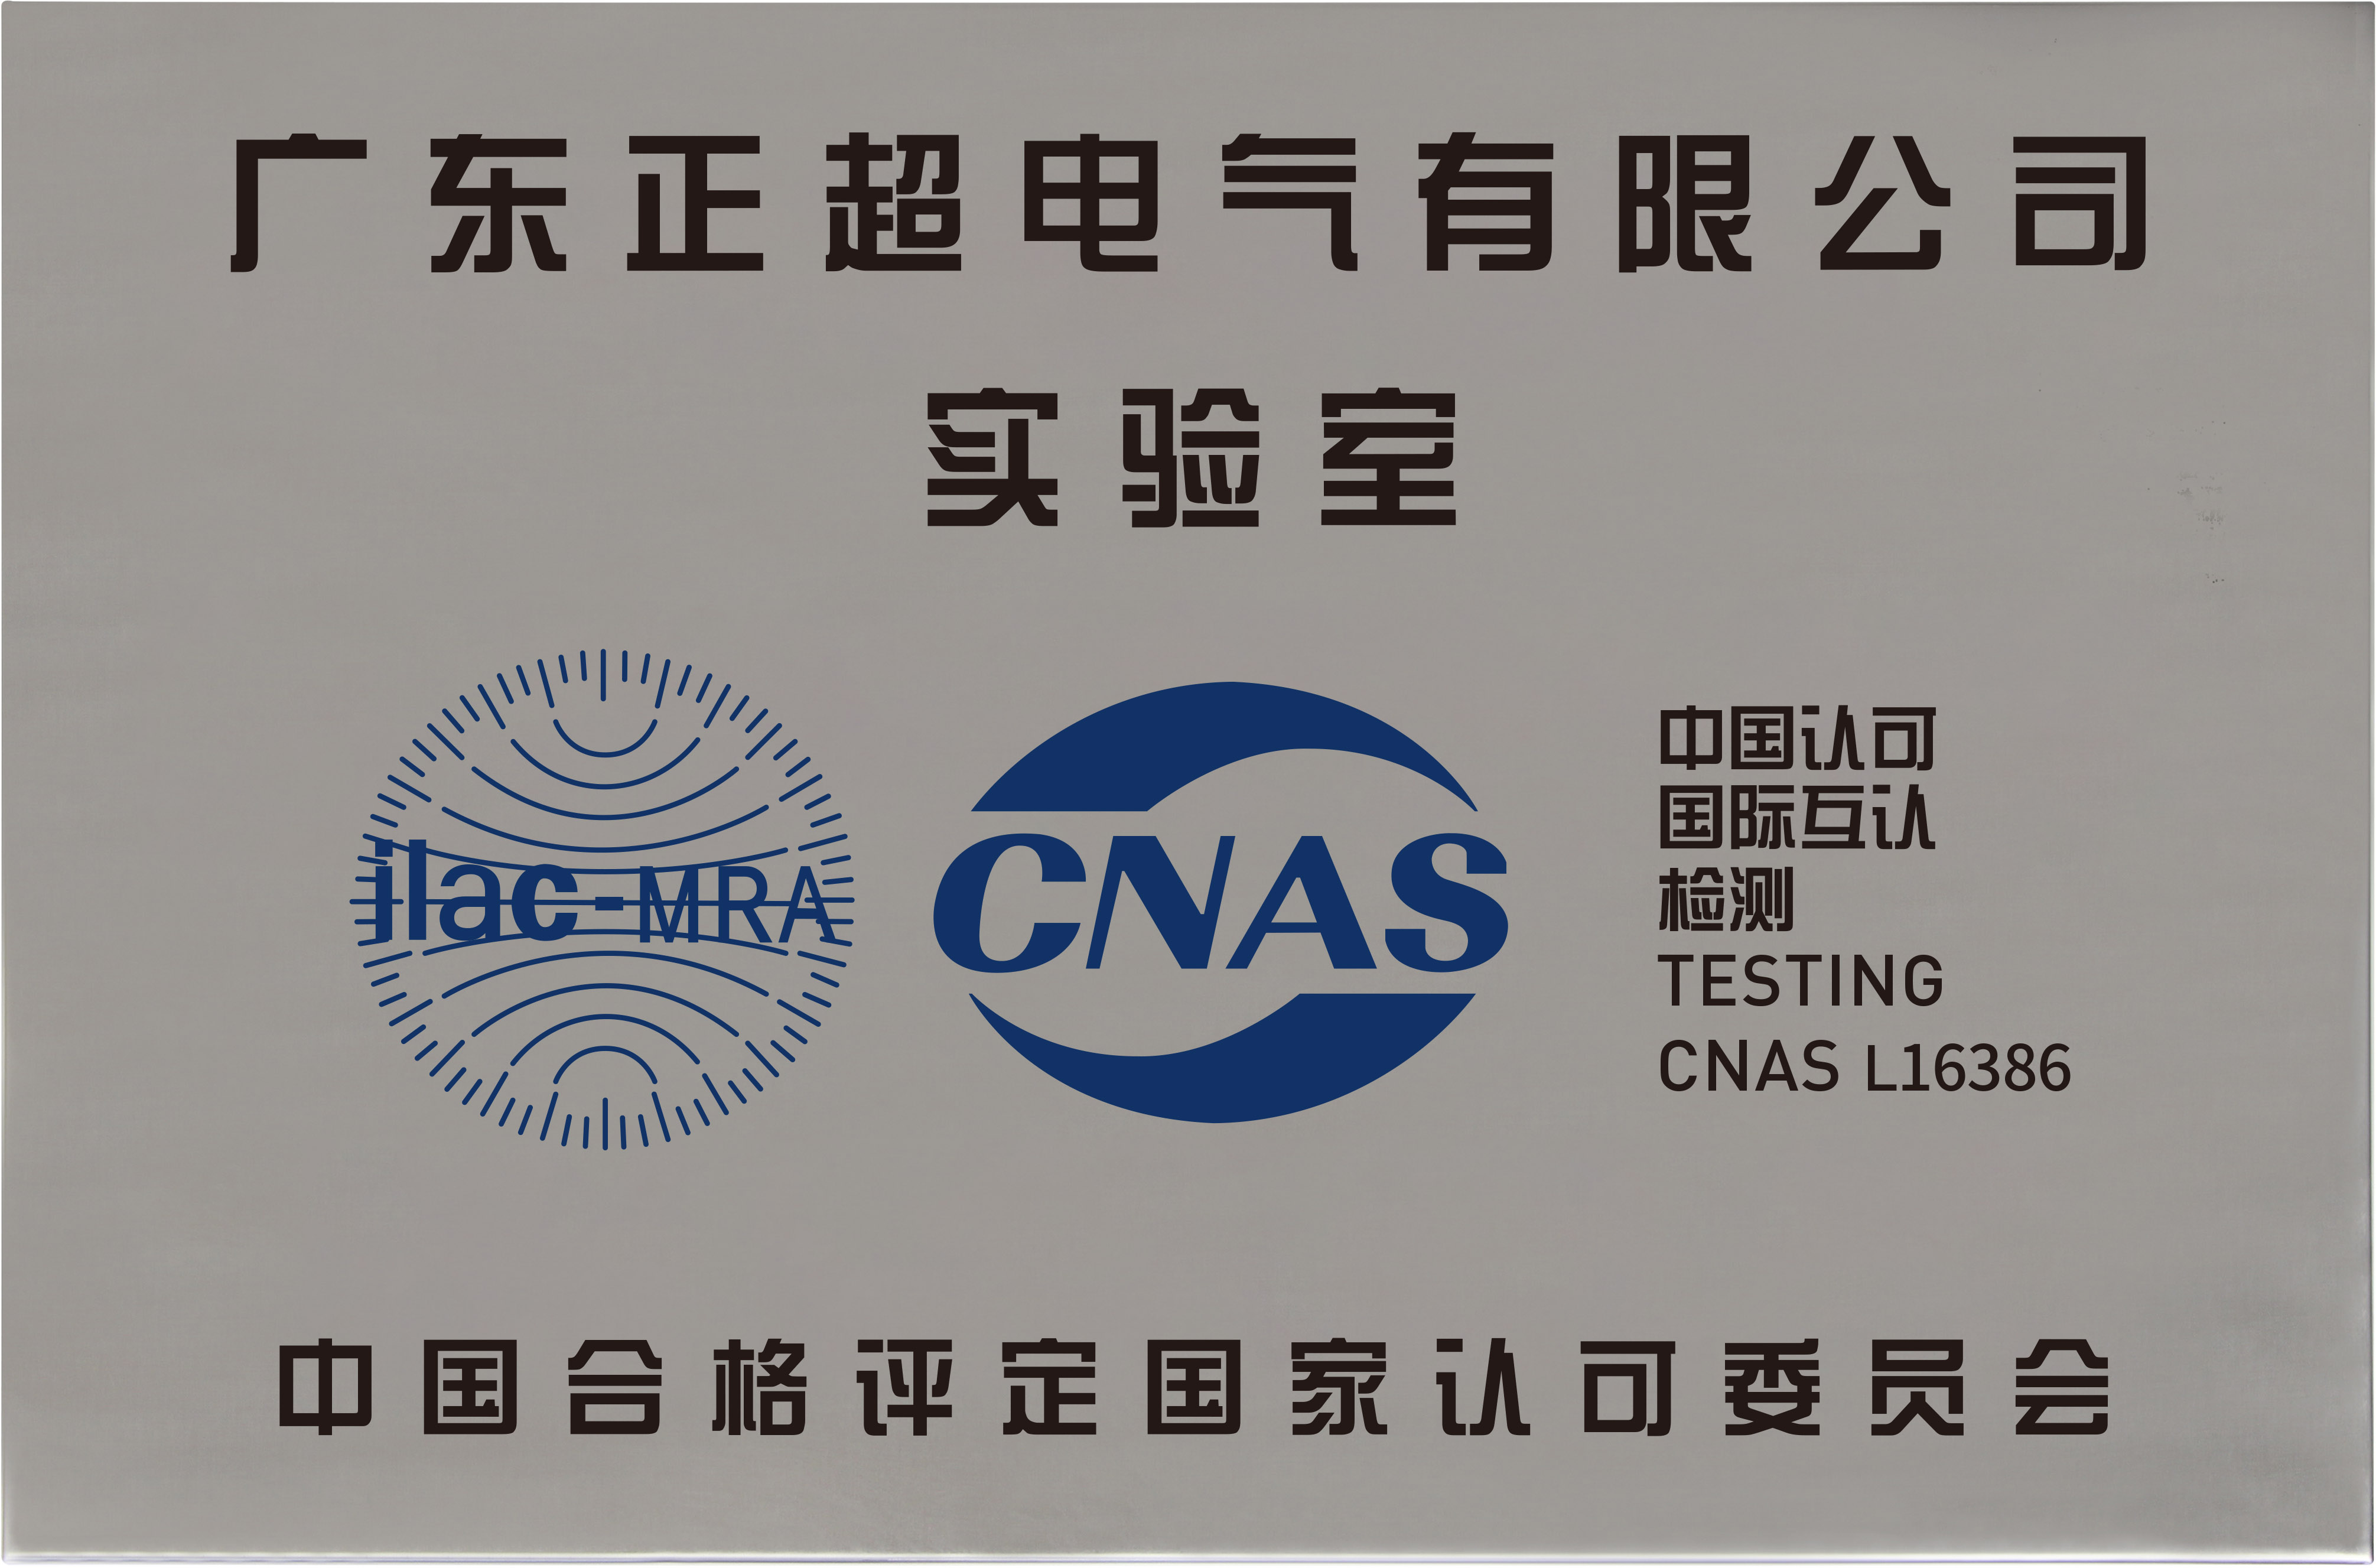 Guangdong Zhengchao Electric - CNAS laboratory